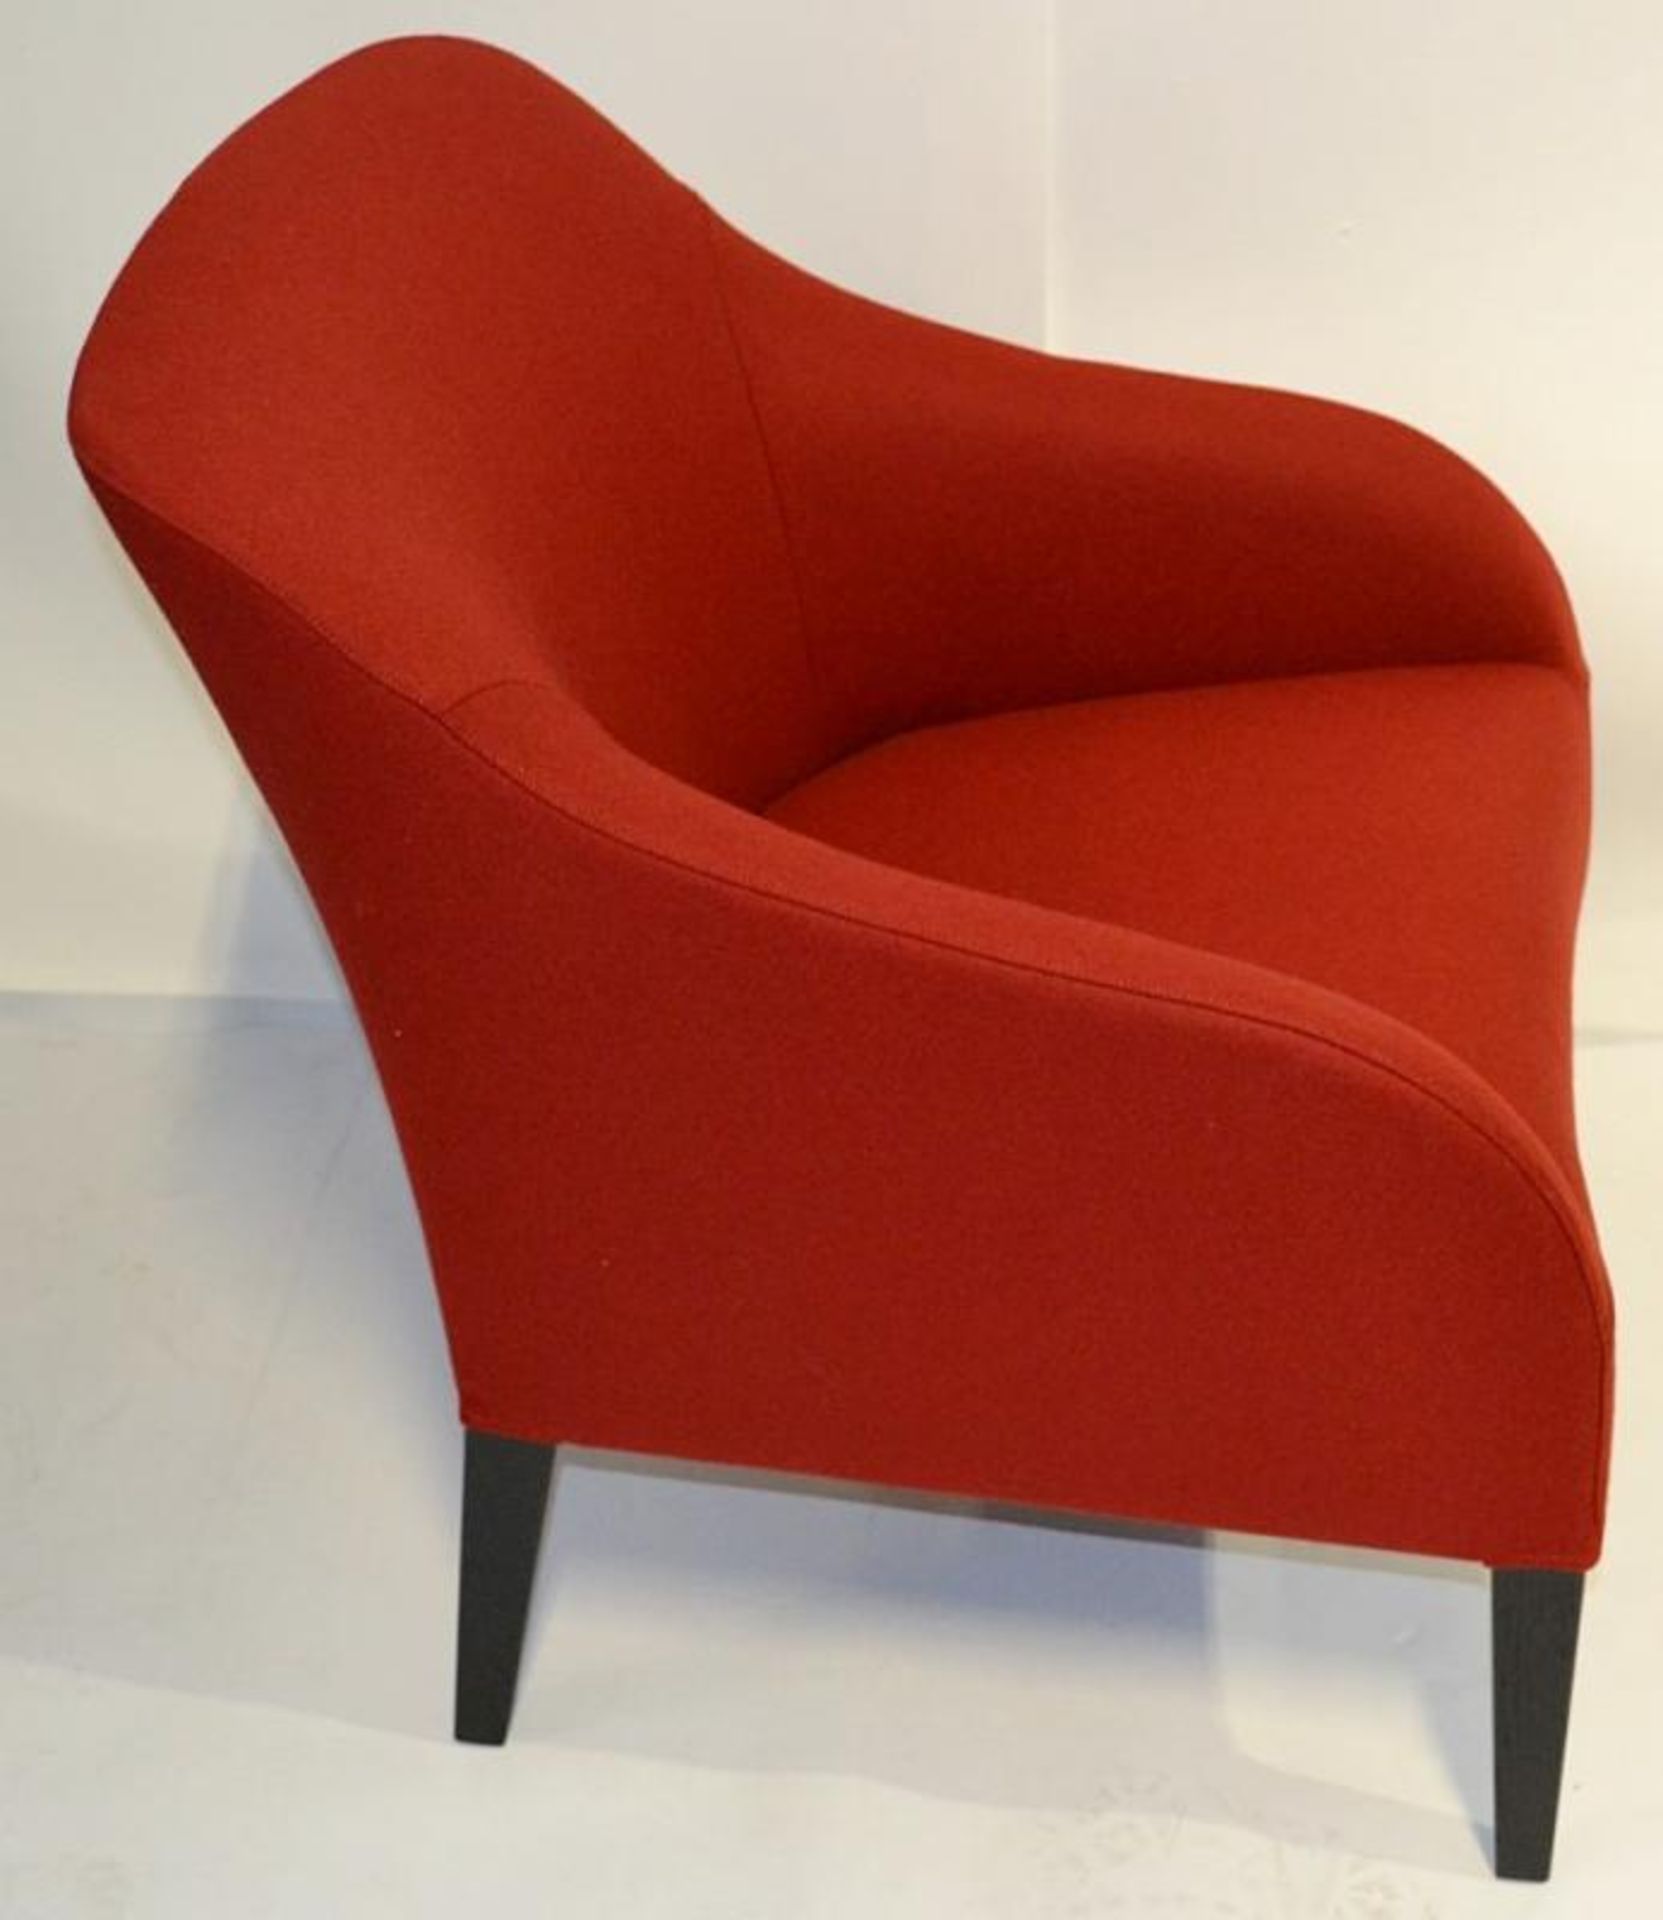 1 x B&B ITALIA Maxalto "Agathos" Armchair In Bright Red With Black Legs - Designed By Antonio Citter - Image 4 of 7